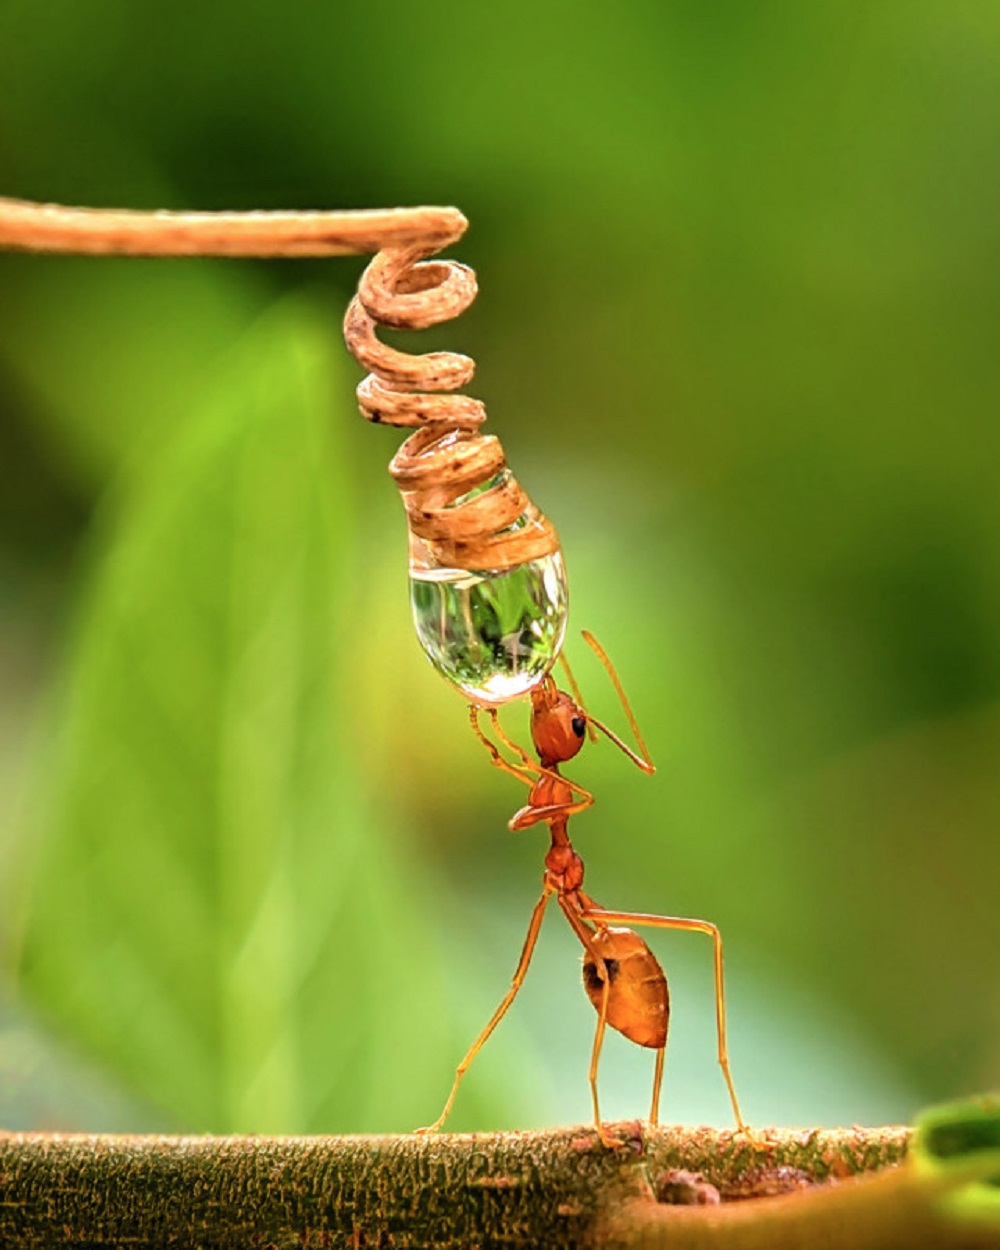 Una formica beve da una goccia d'acqua